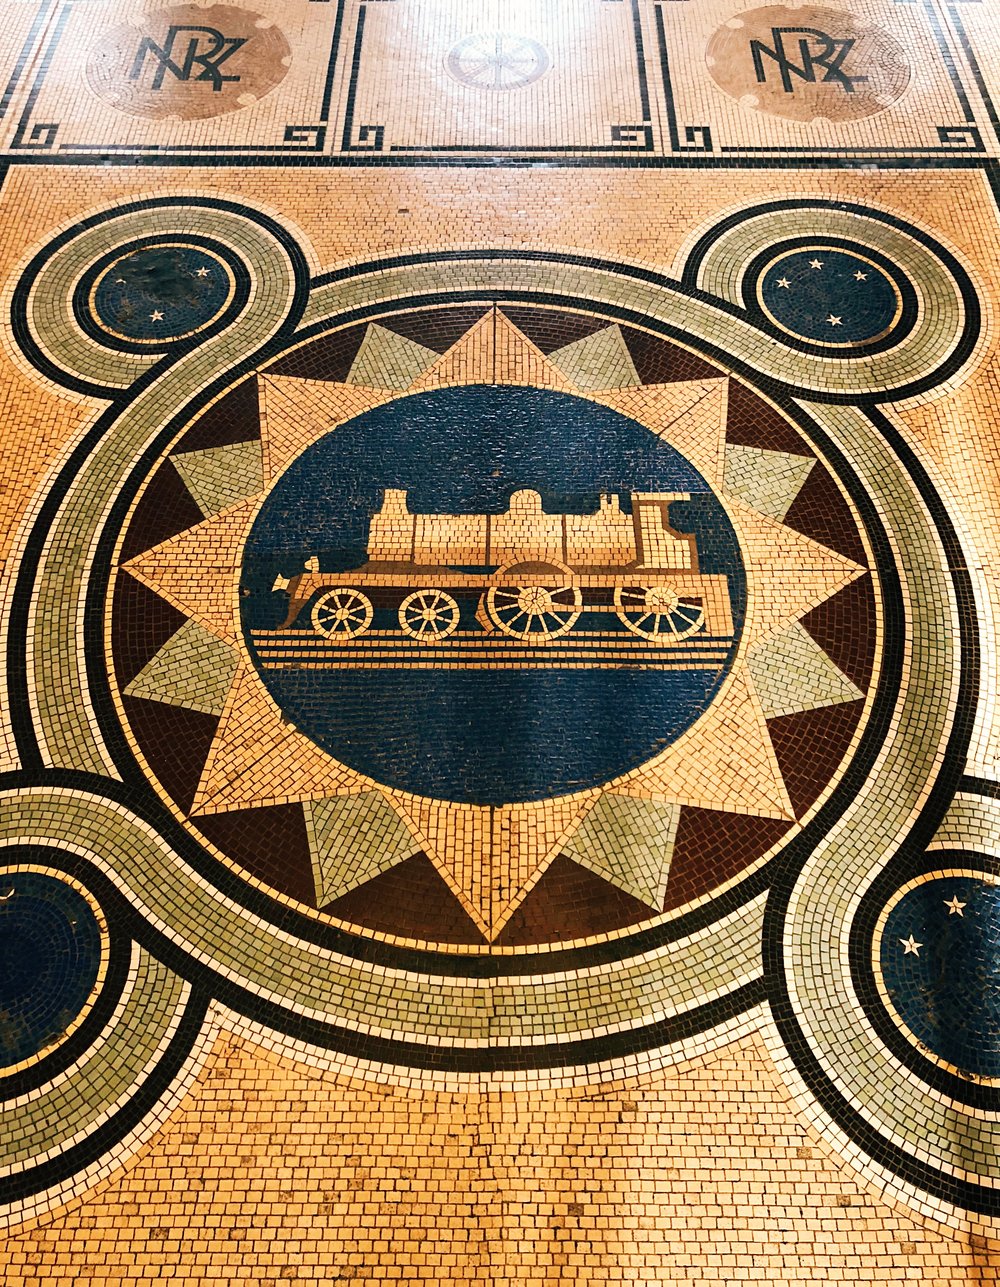 Tiles on the floor of Railway Station